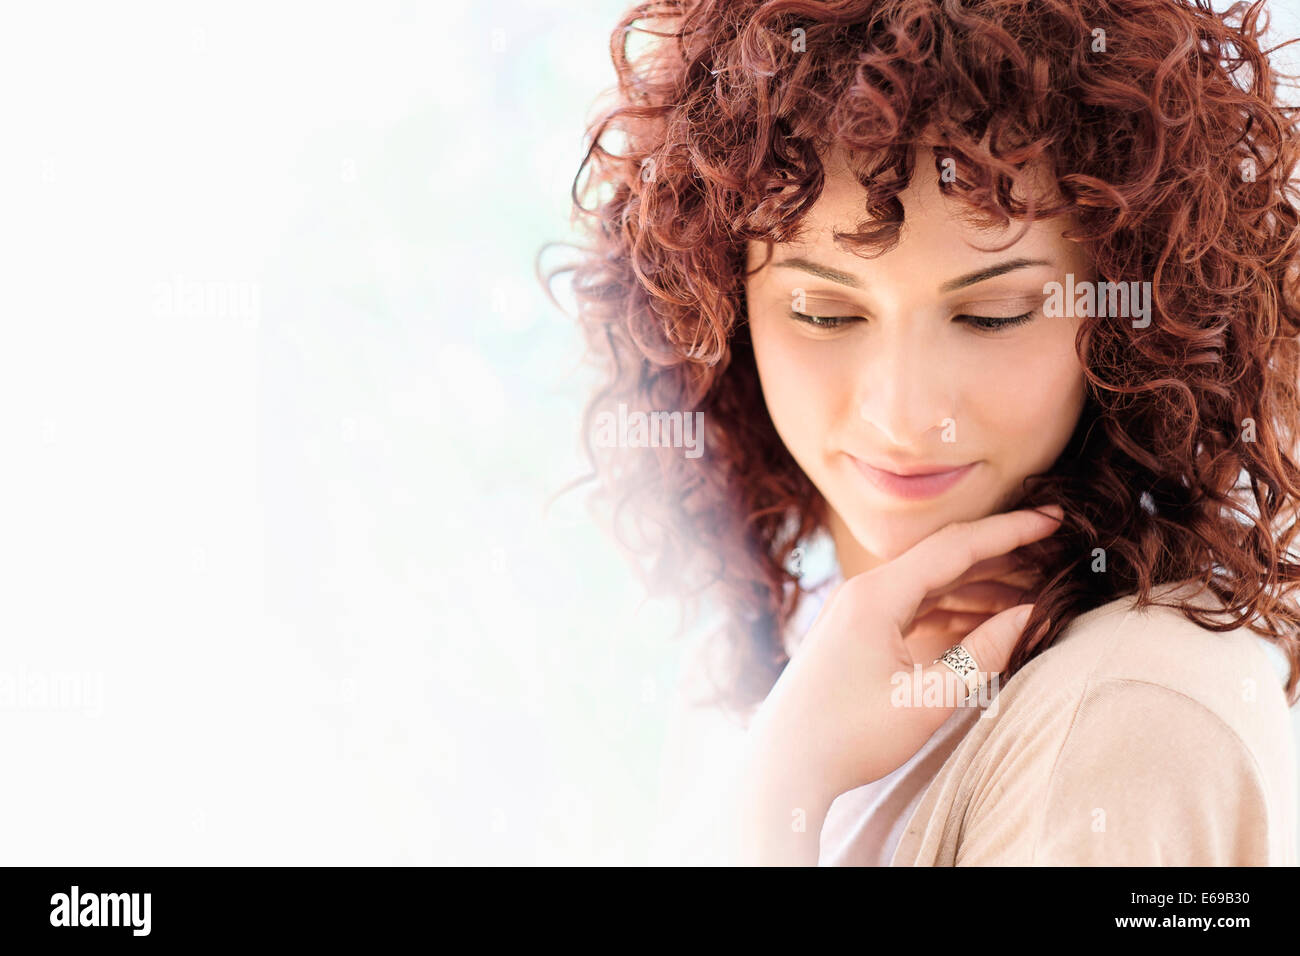 Hispanic woman holding chin in hands Stock Photo